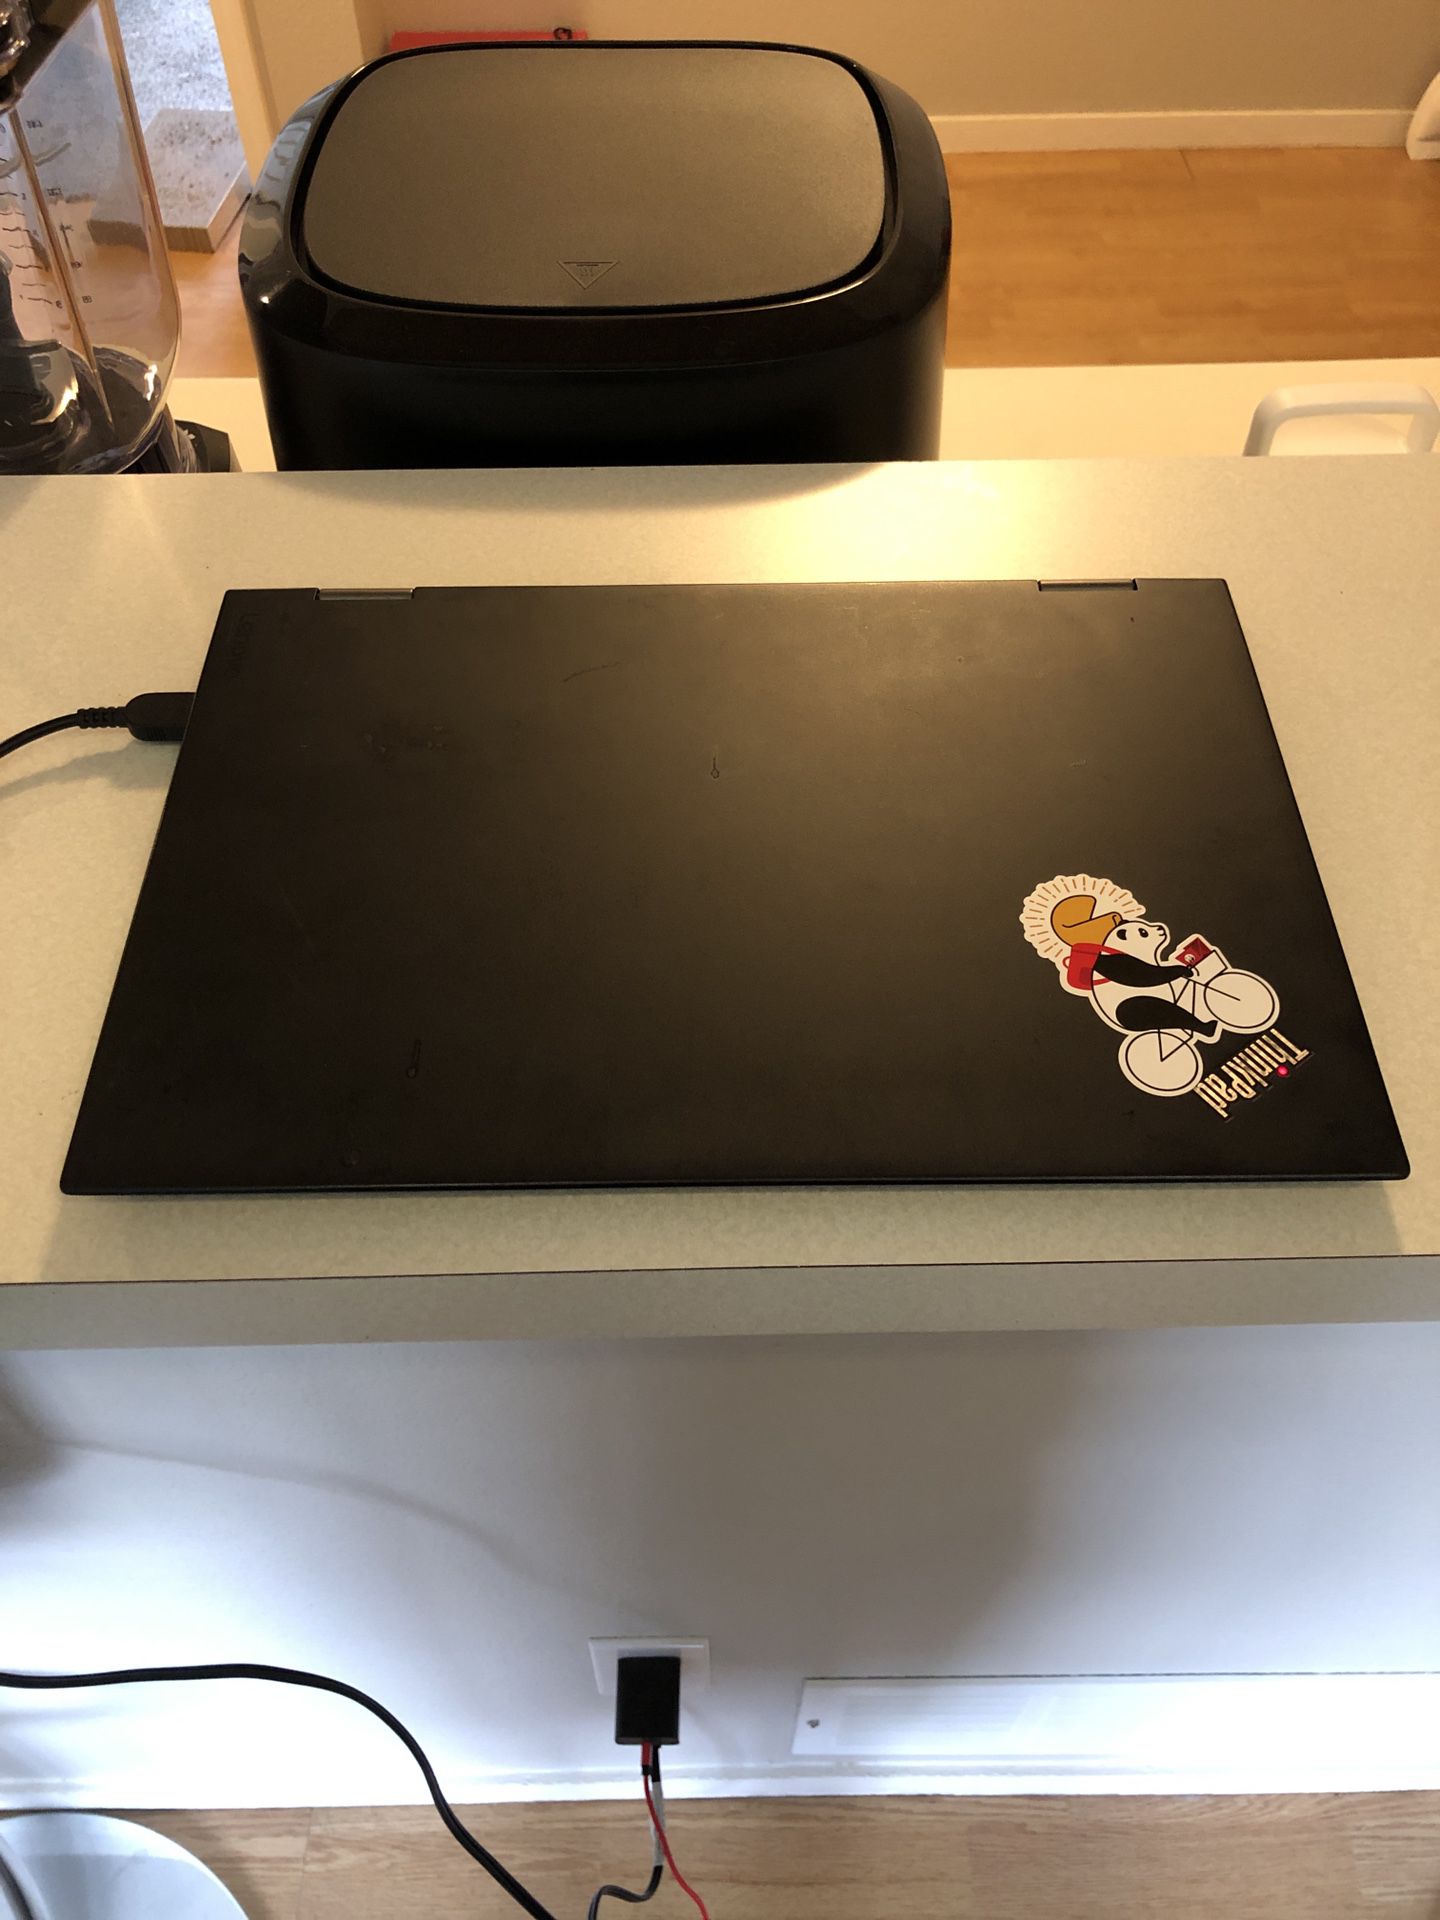 X1 Yoga 1st Gen (Type 20 FQ, 20FR) Laptop (ThinkPad)